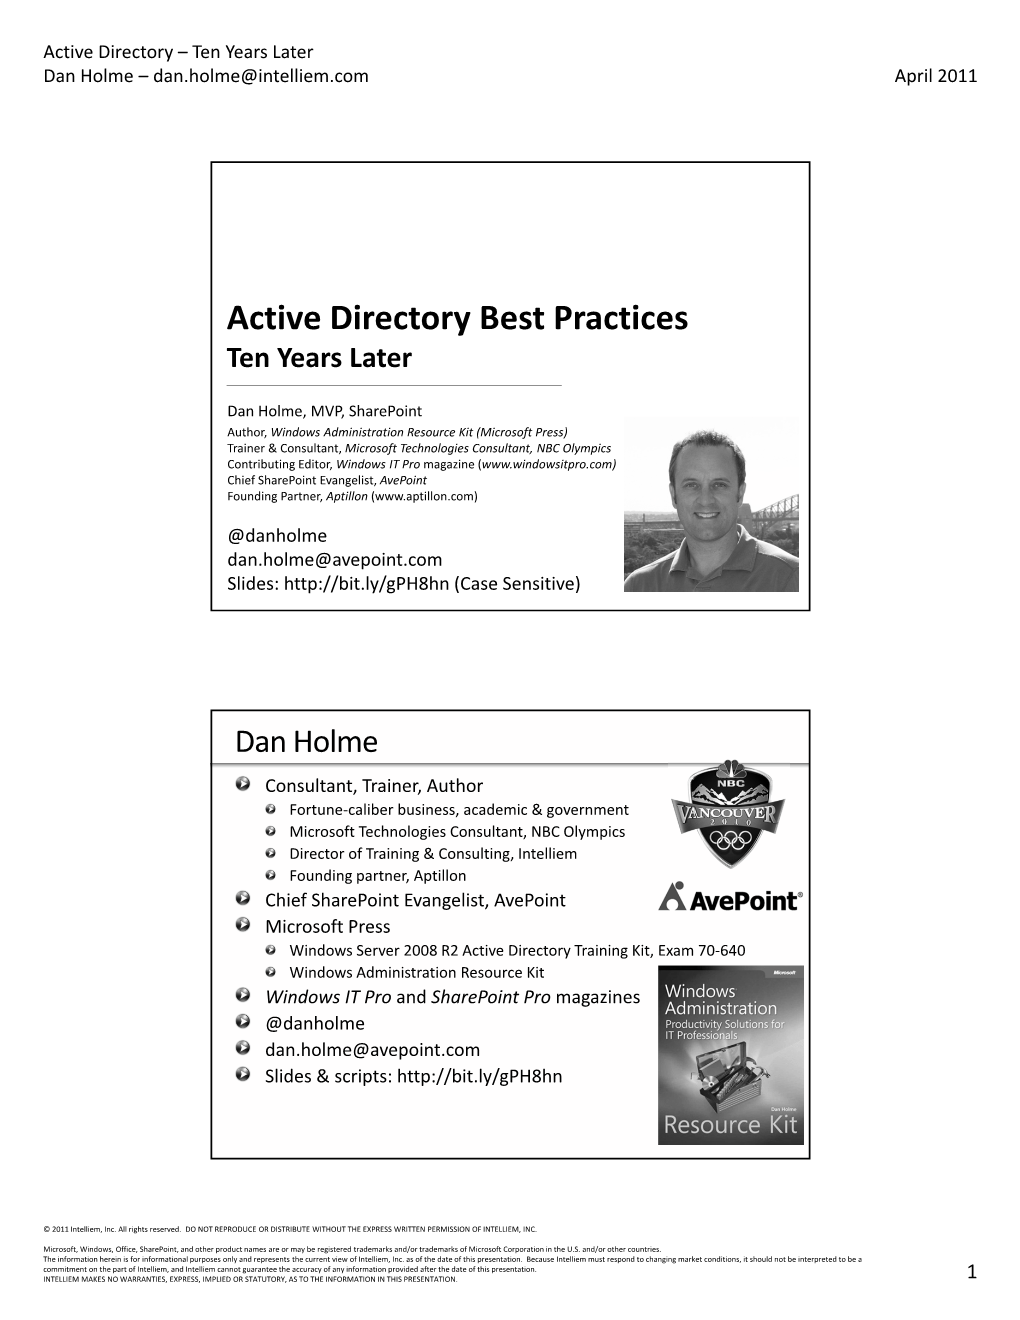 Active Directory Best Practices Ten Years Later